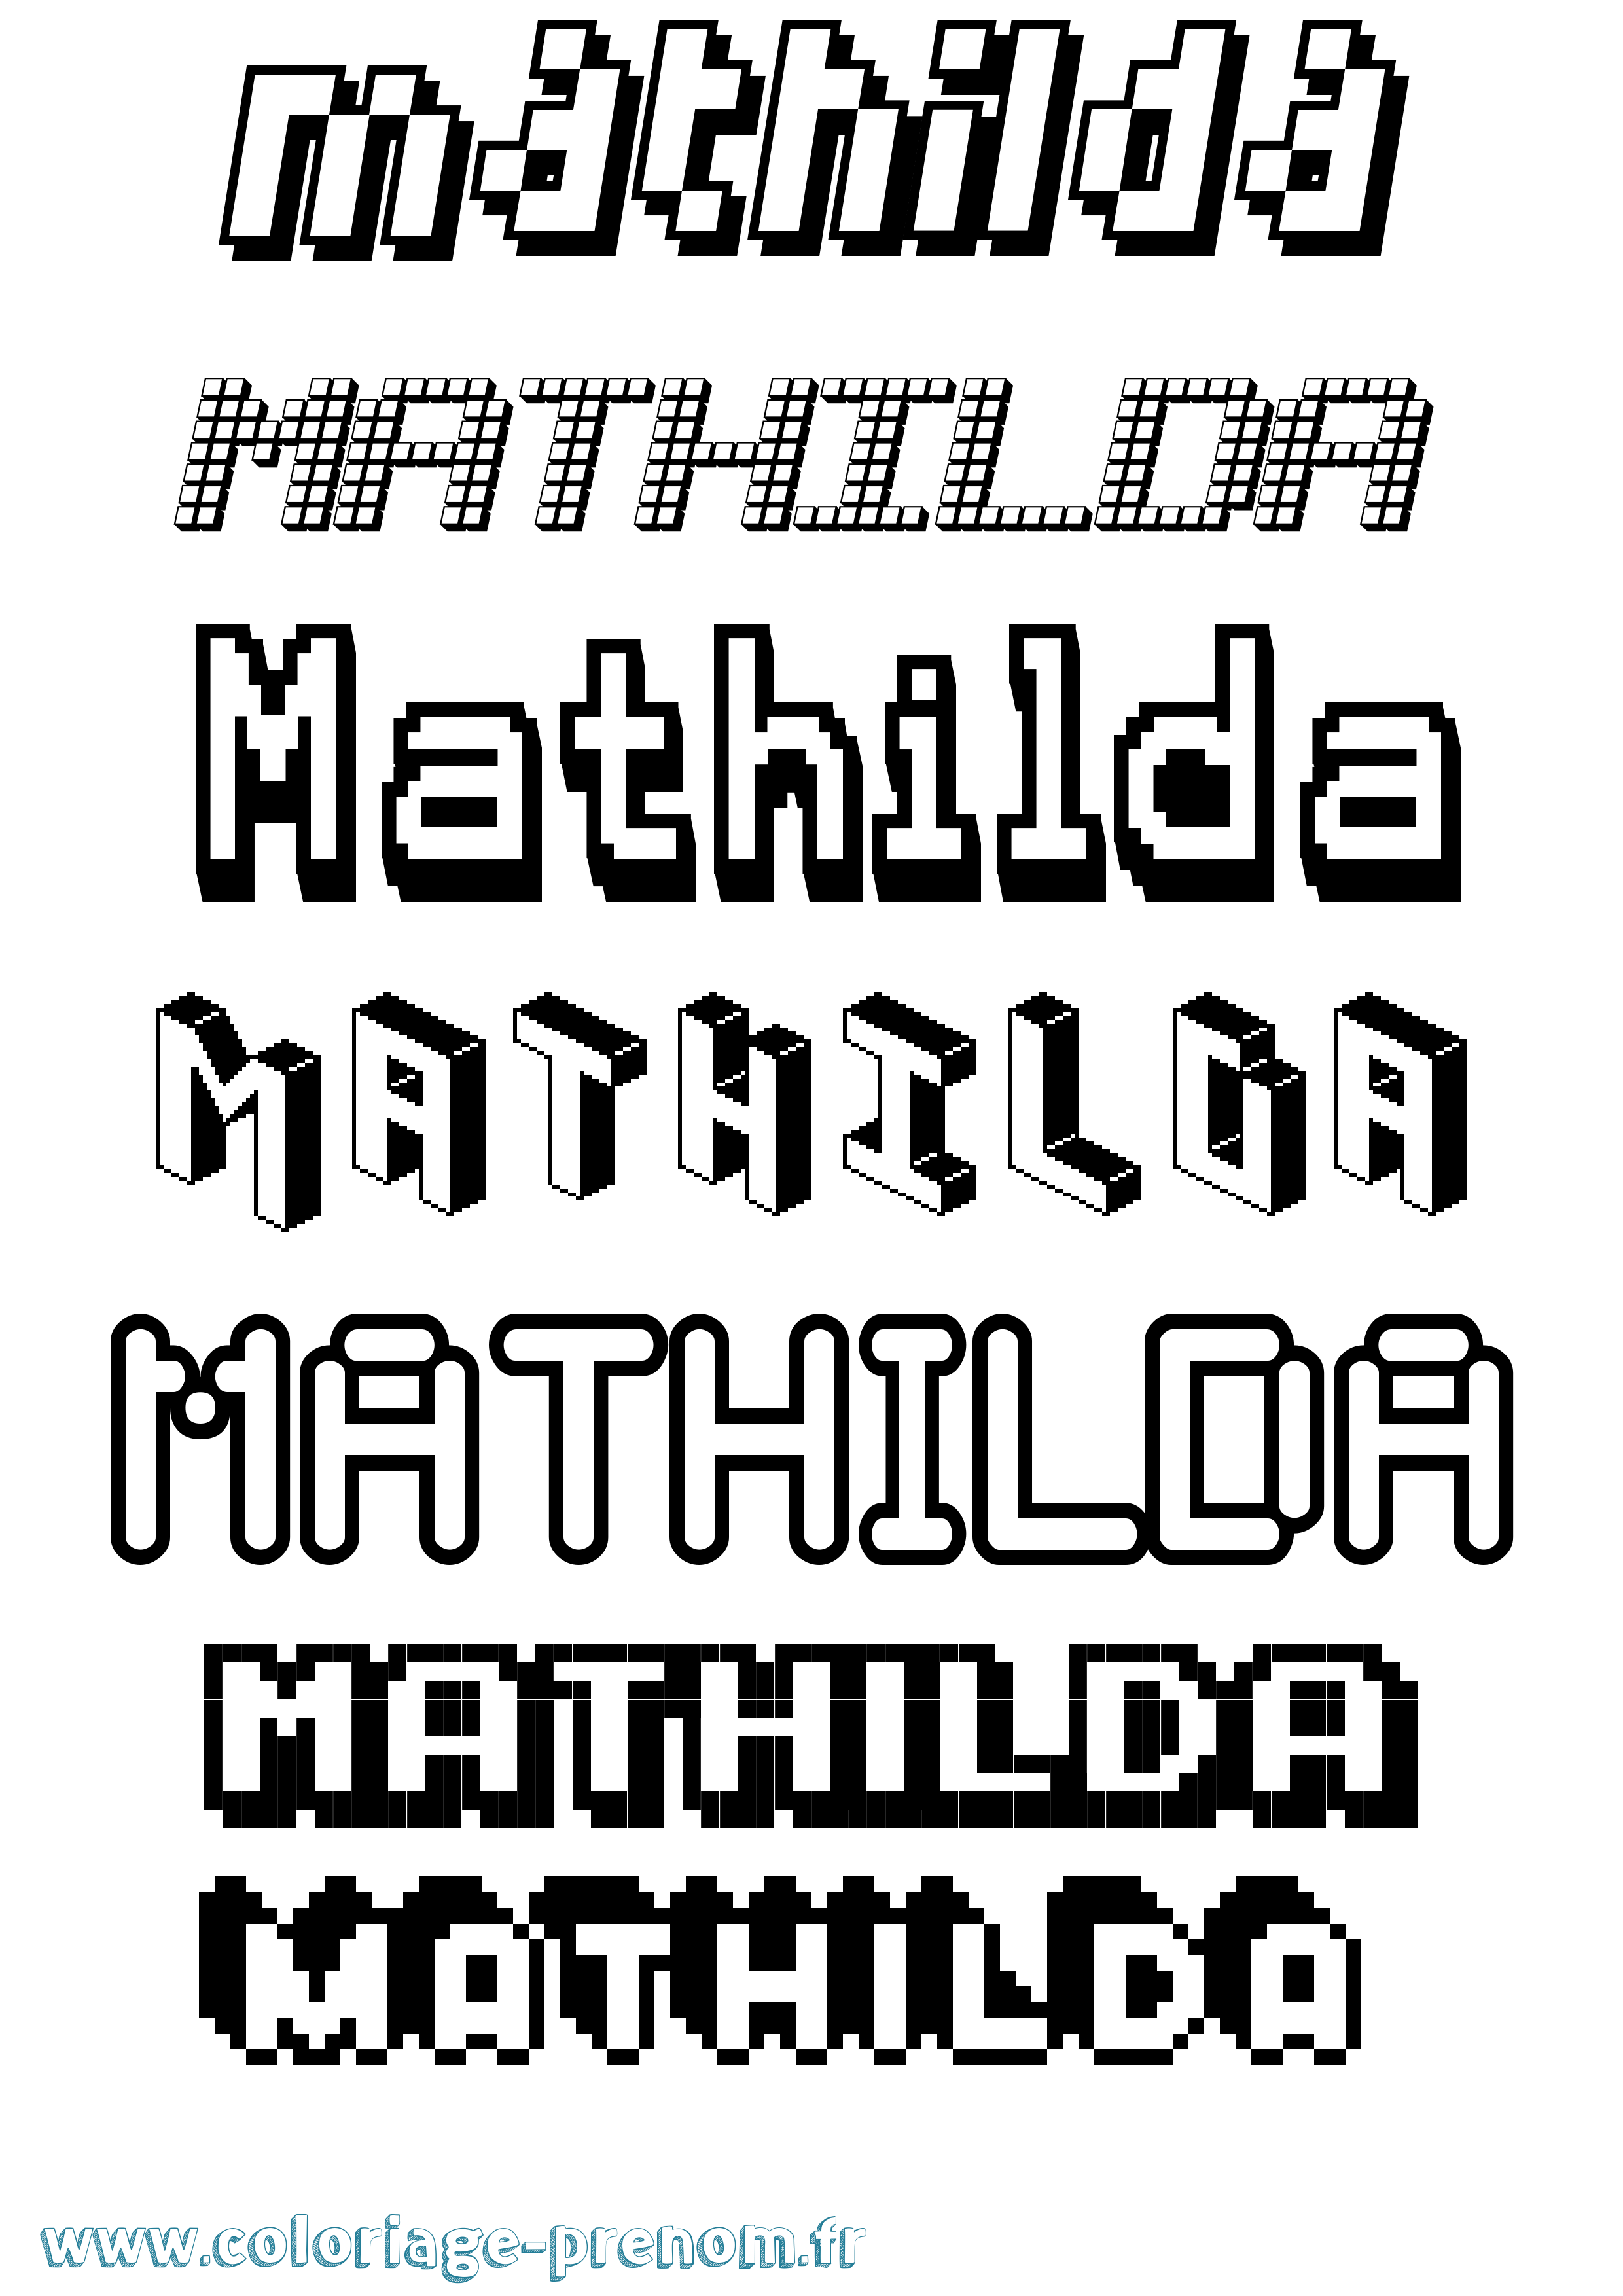 Coloriage prénom Mathilda Pixel